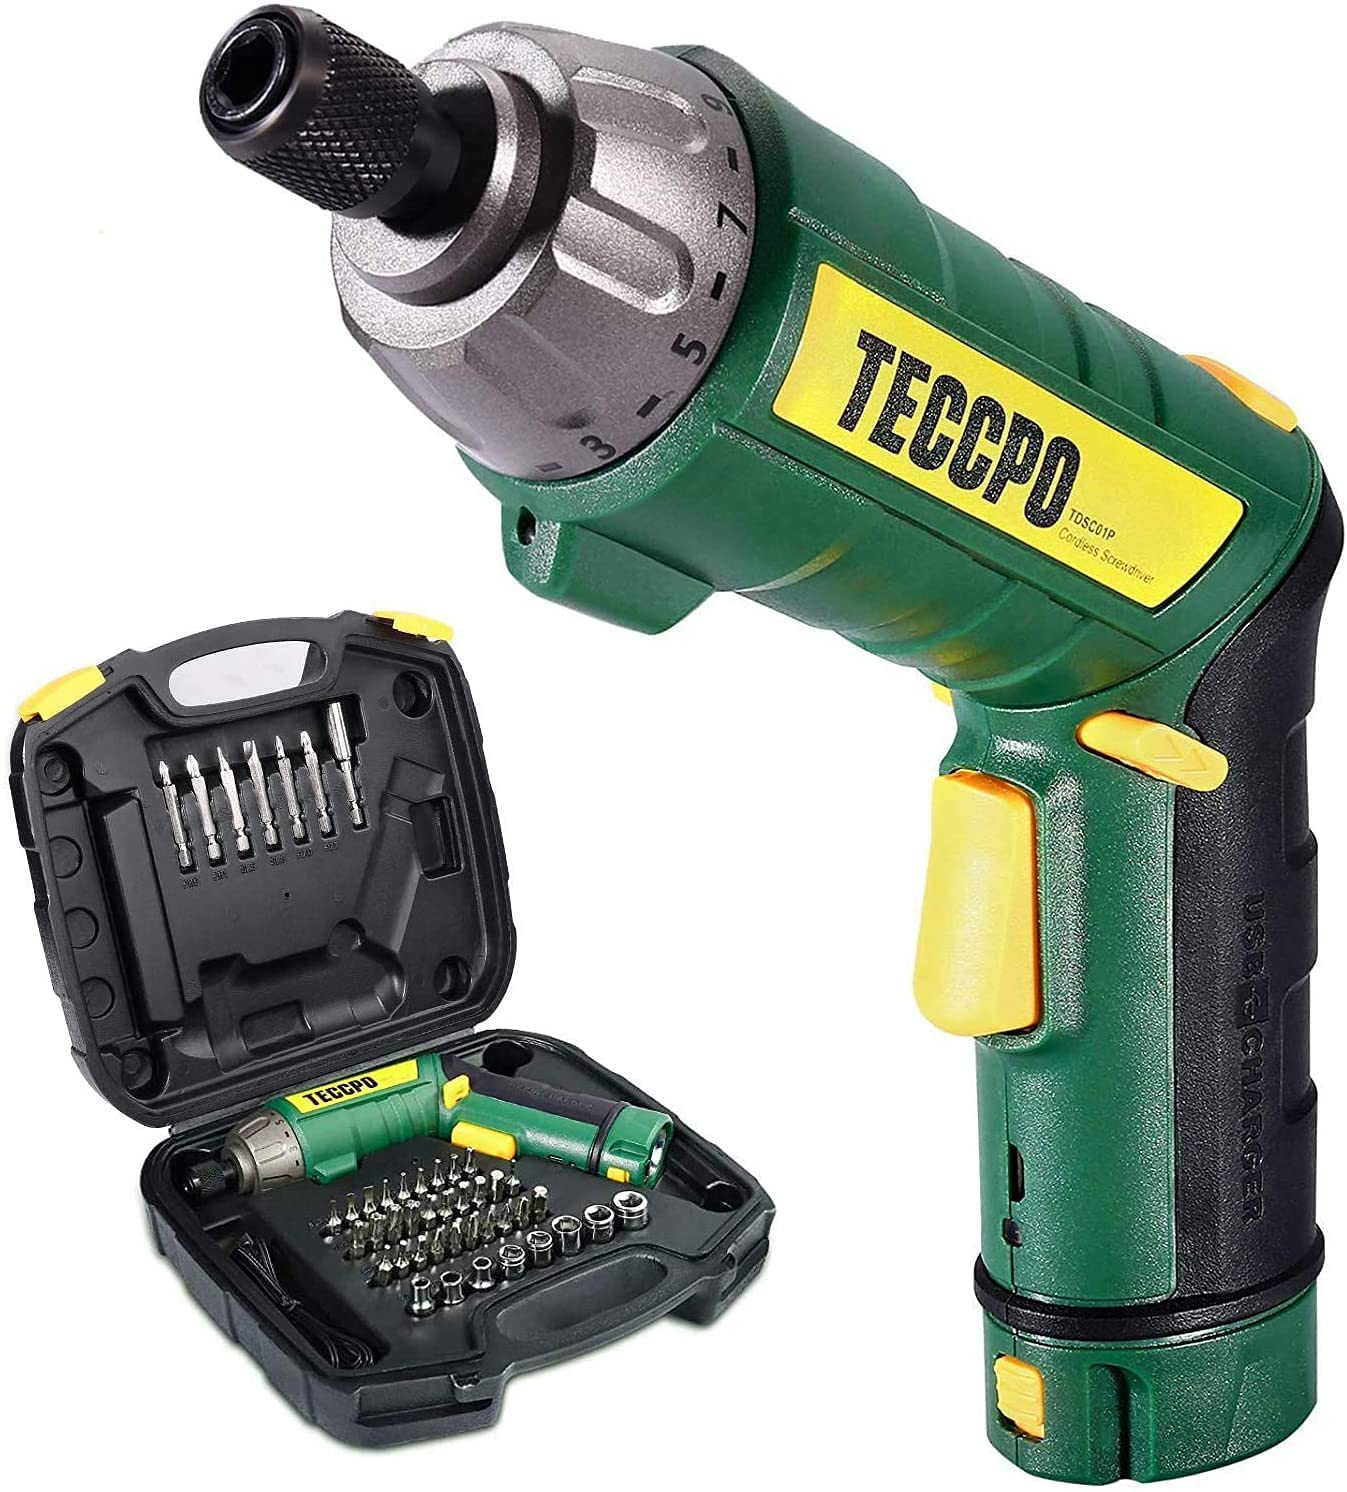 TECCPO 4V Cordless Electric Screwdriver 45Pcs 6N.m, 9+1 Torque Gears, 1/4'' Hex Self-Lock $19.25